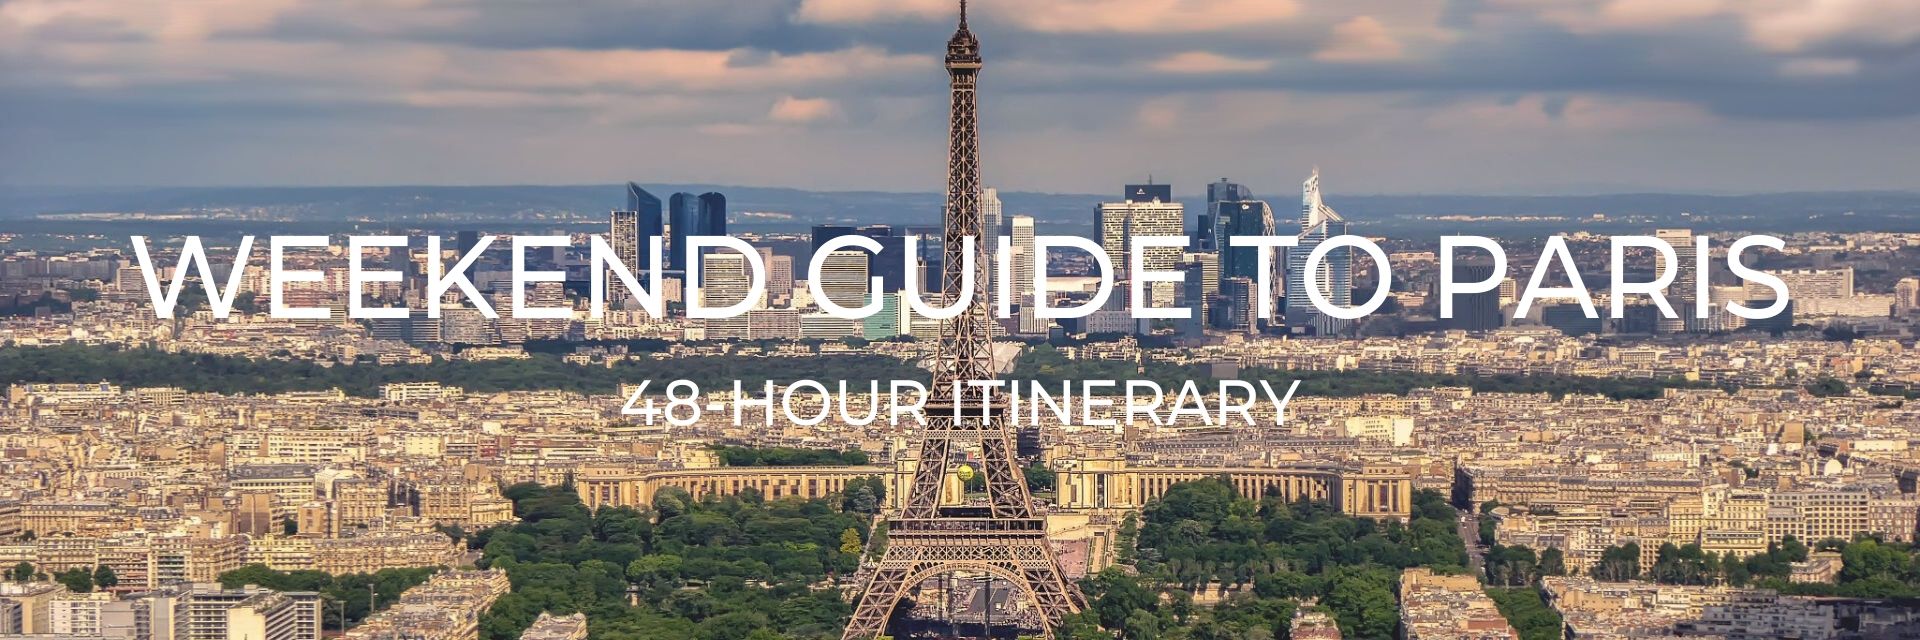 Weekend Guide to Paris 48 Hour Itinerary Desktop Header